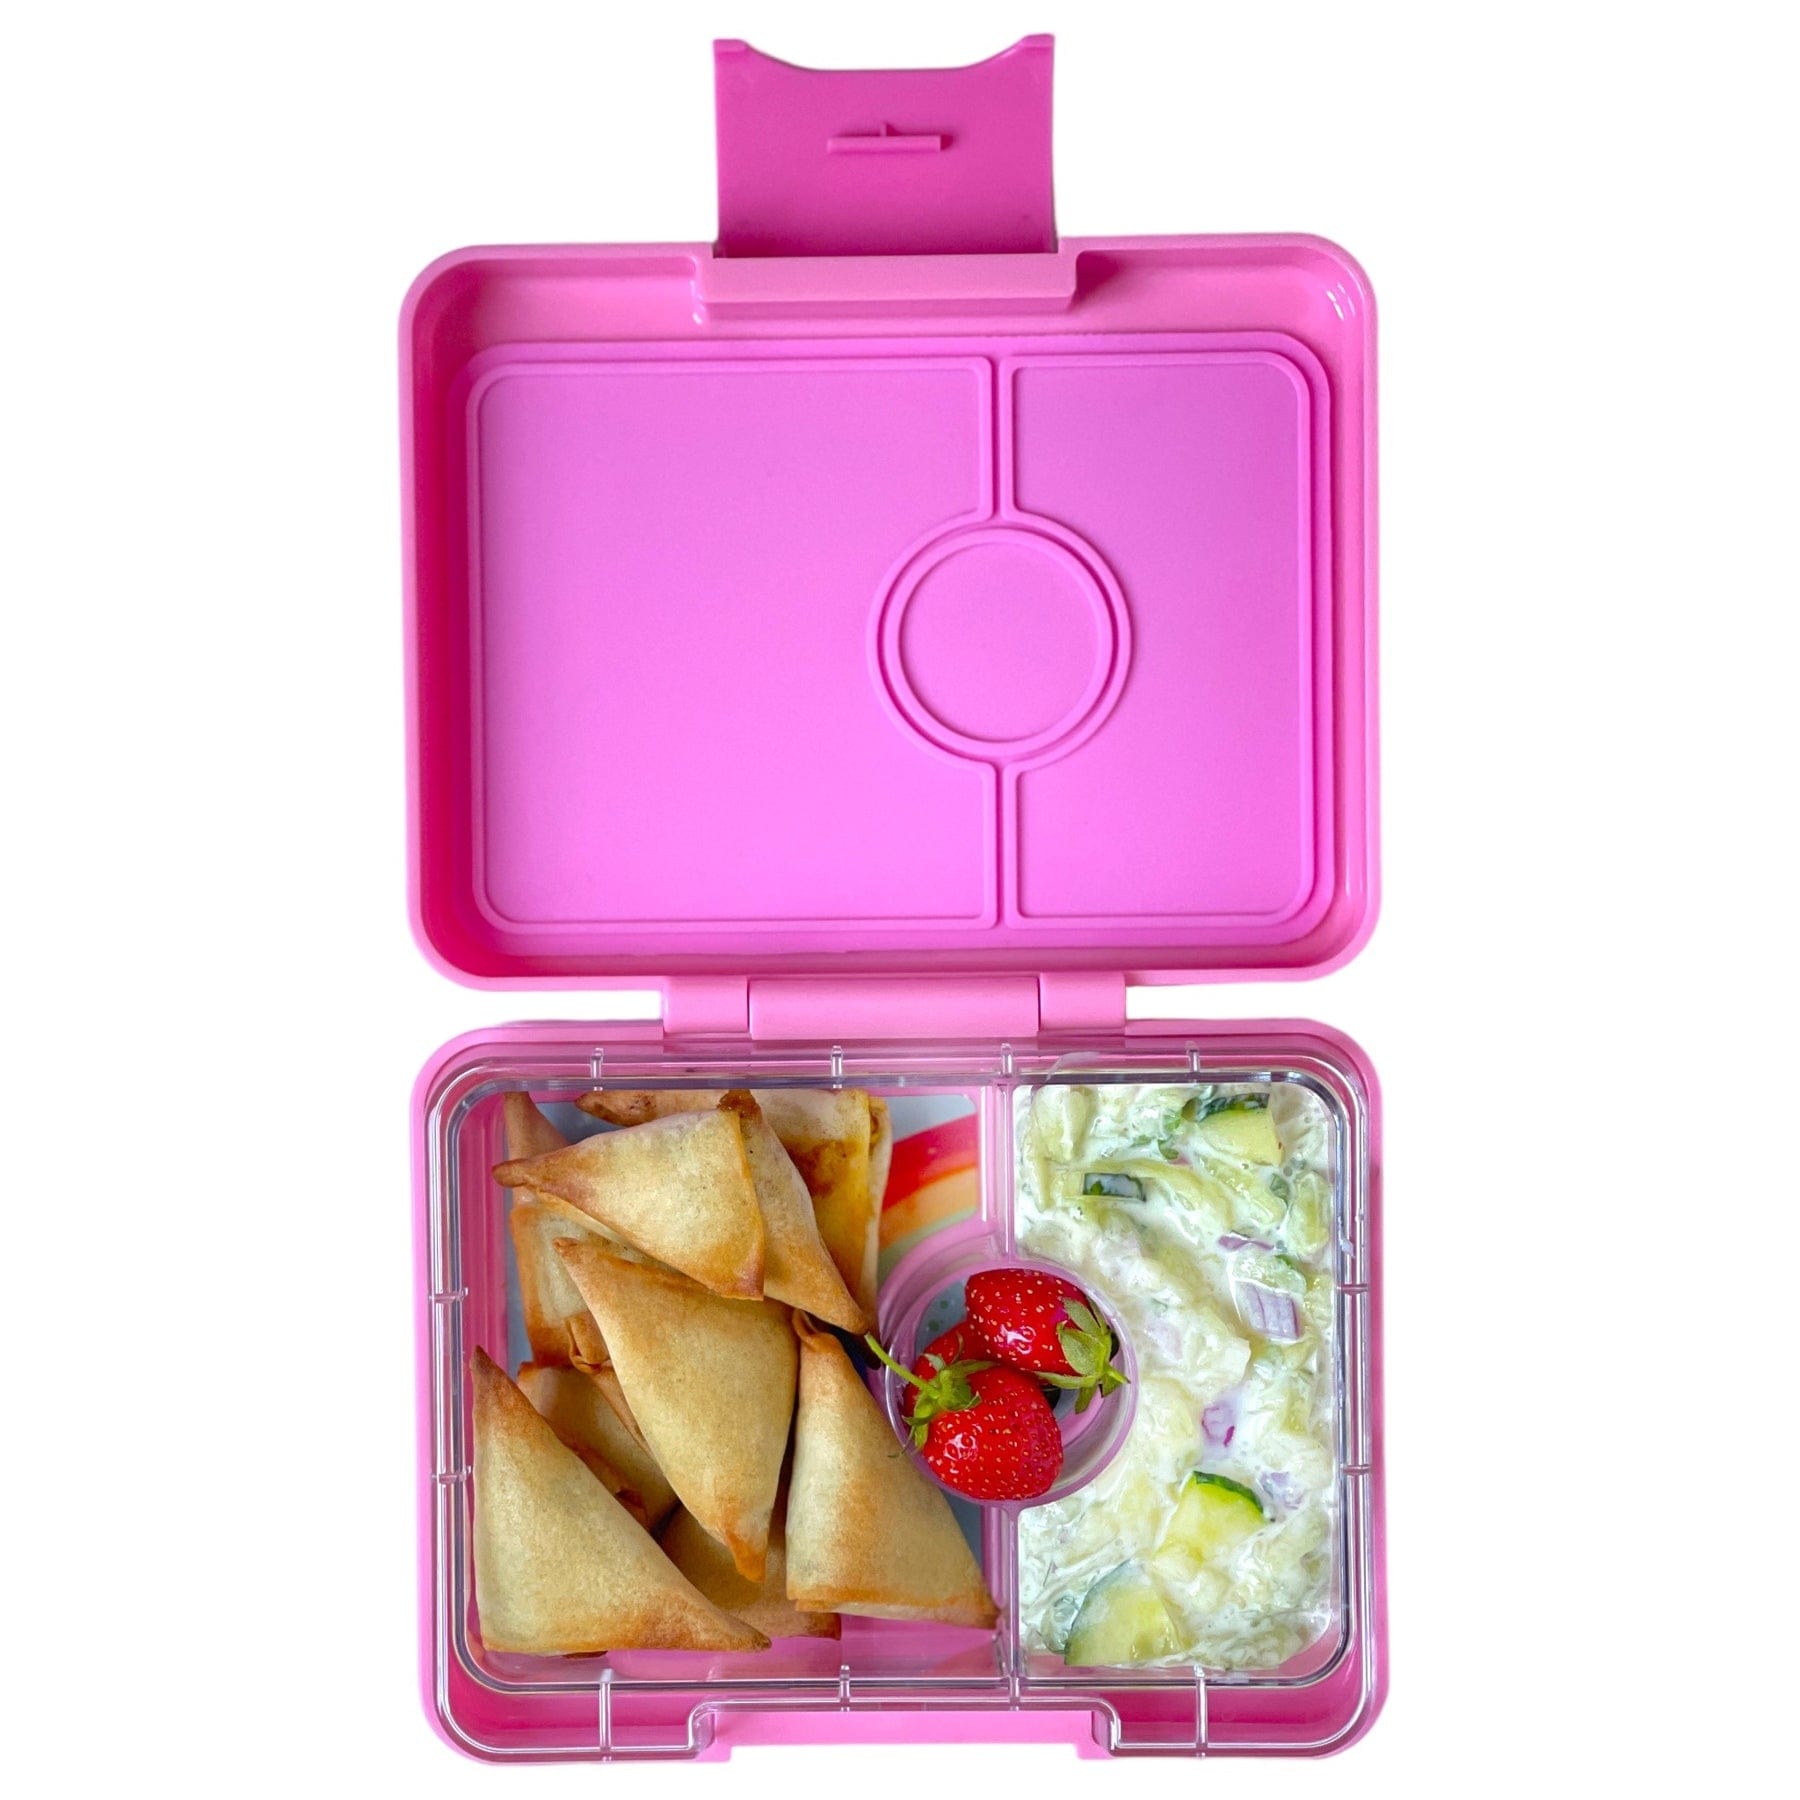 Yumbox Accessory Feeding Yumbox Snack - Coco Pink (Rainbow)